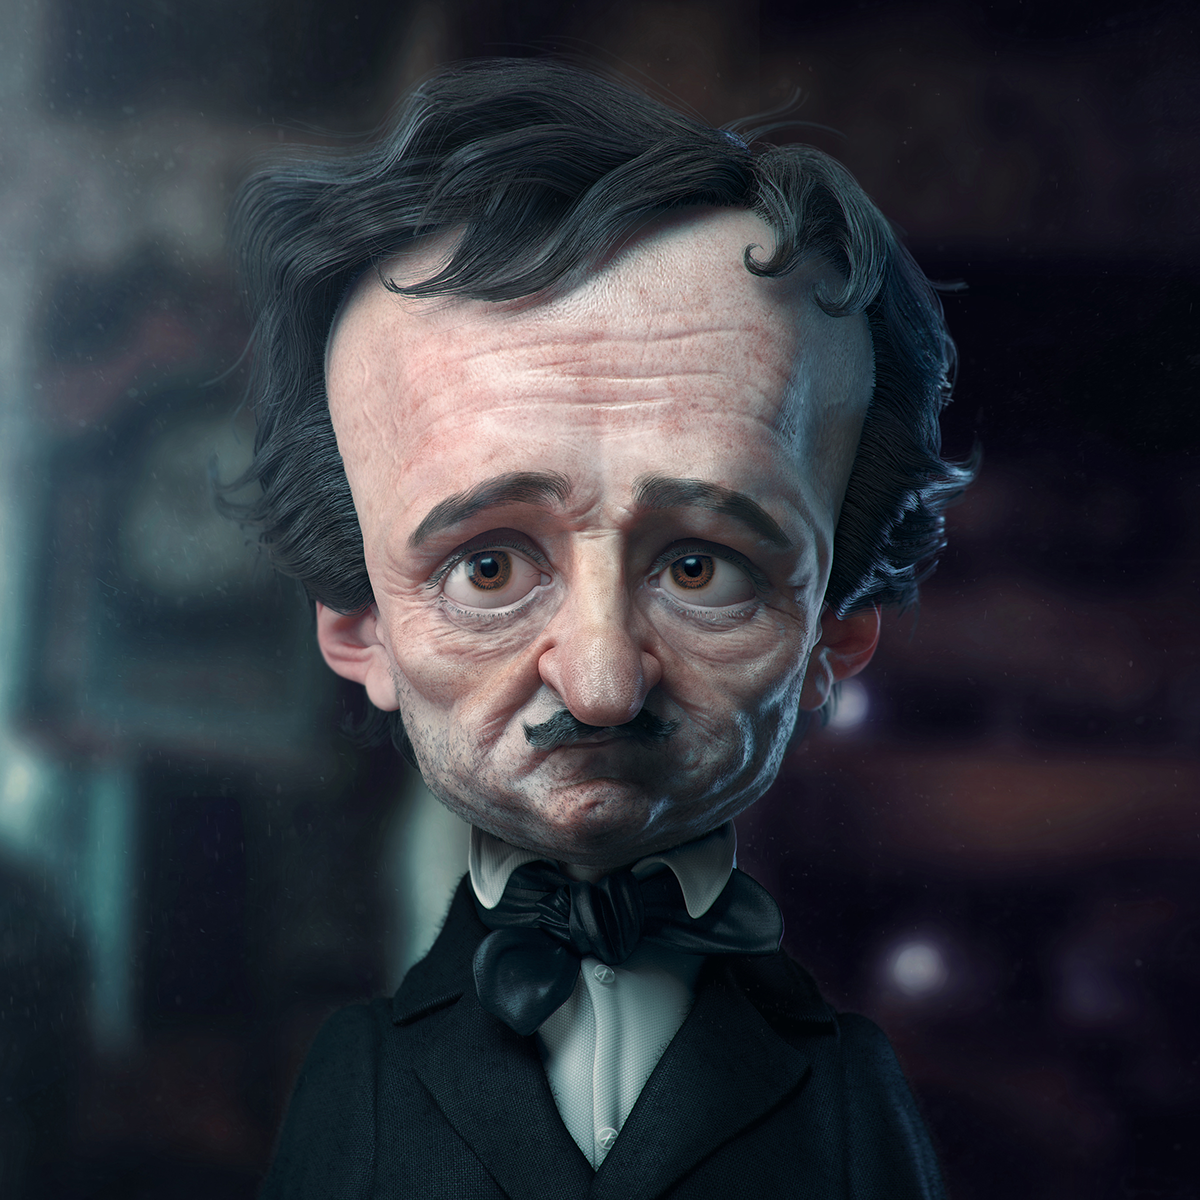 Edgar Allan Poe Zbrush 3dsmax jorge pepelife Poe never more ornatrix Character design  allan poe 3d digital sculpt